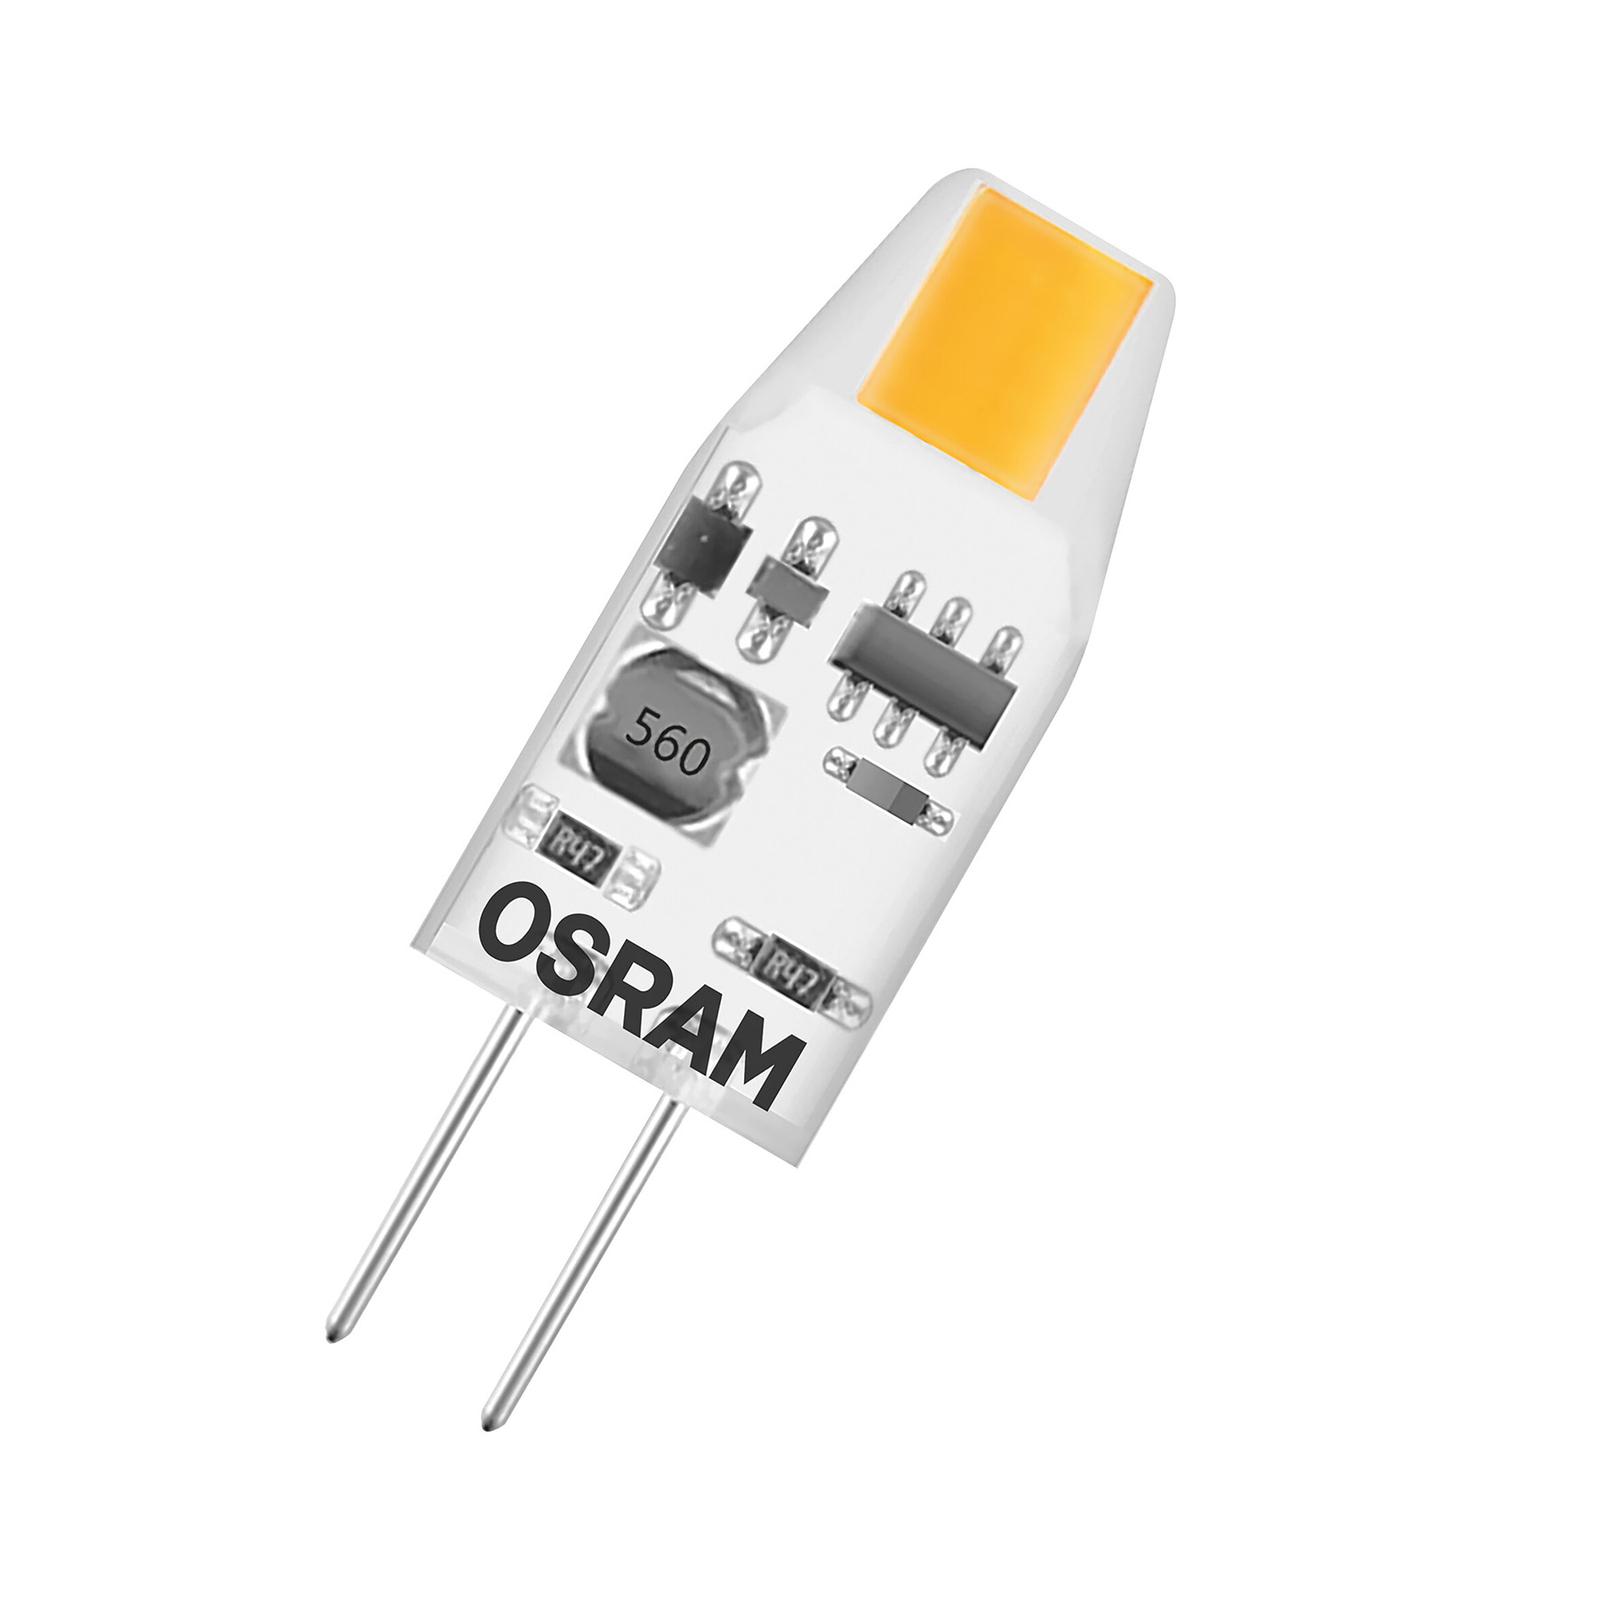 OSRAM PIN Micro LED-2kantalamppu G4 1W 100lm 2700K